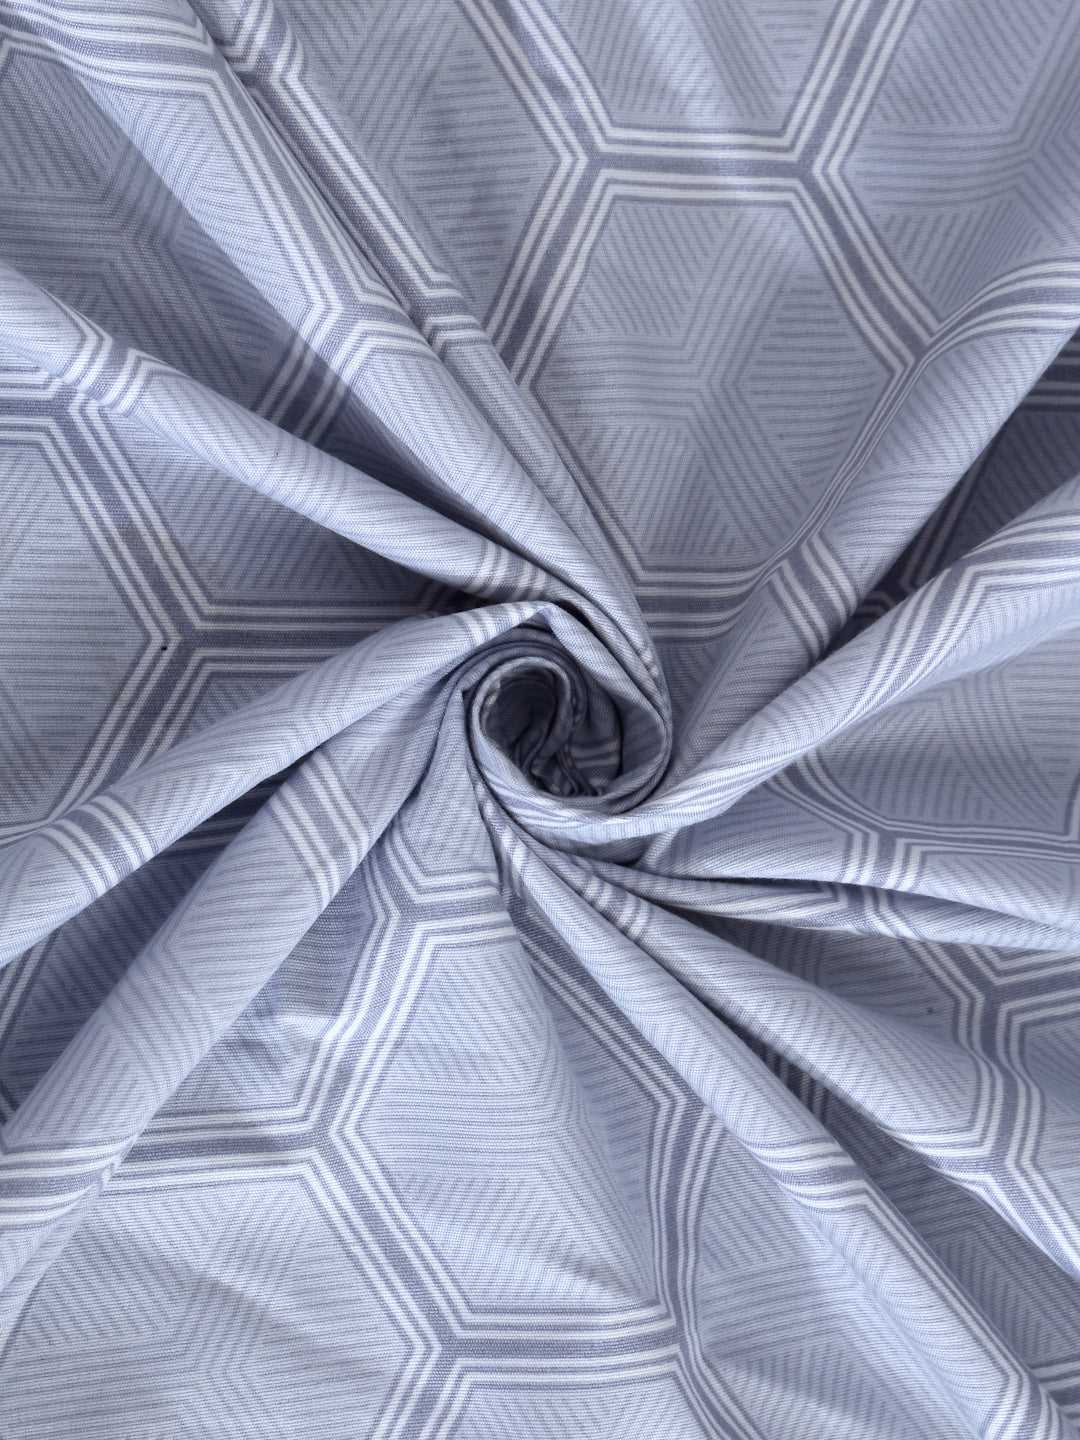 Arrabi Grey Geometric TC Cotton Blend Single Size Bedsheet with 1 Pillow Cover (215 x 150 cm)